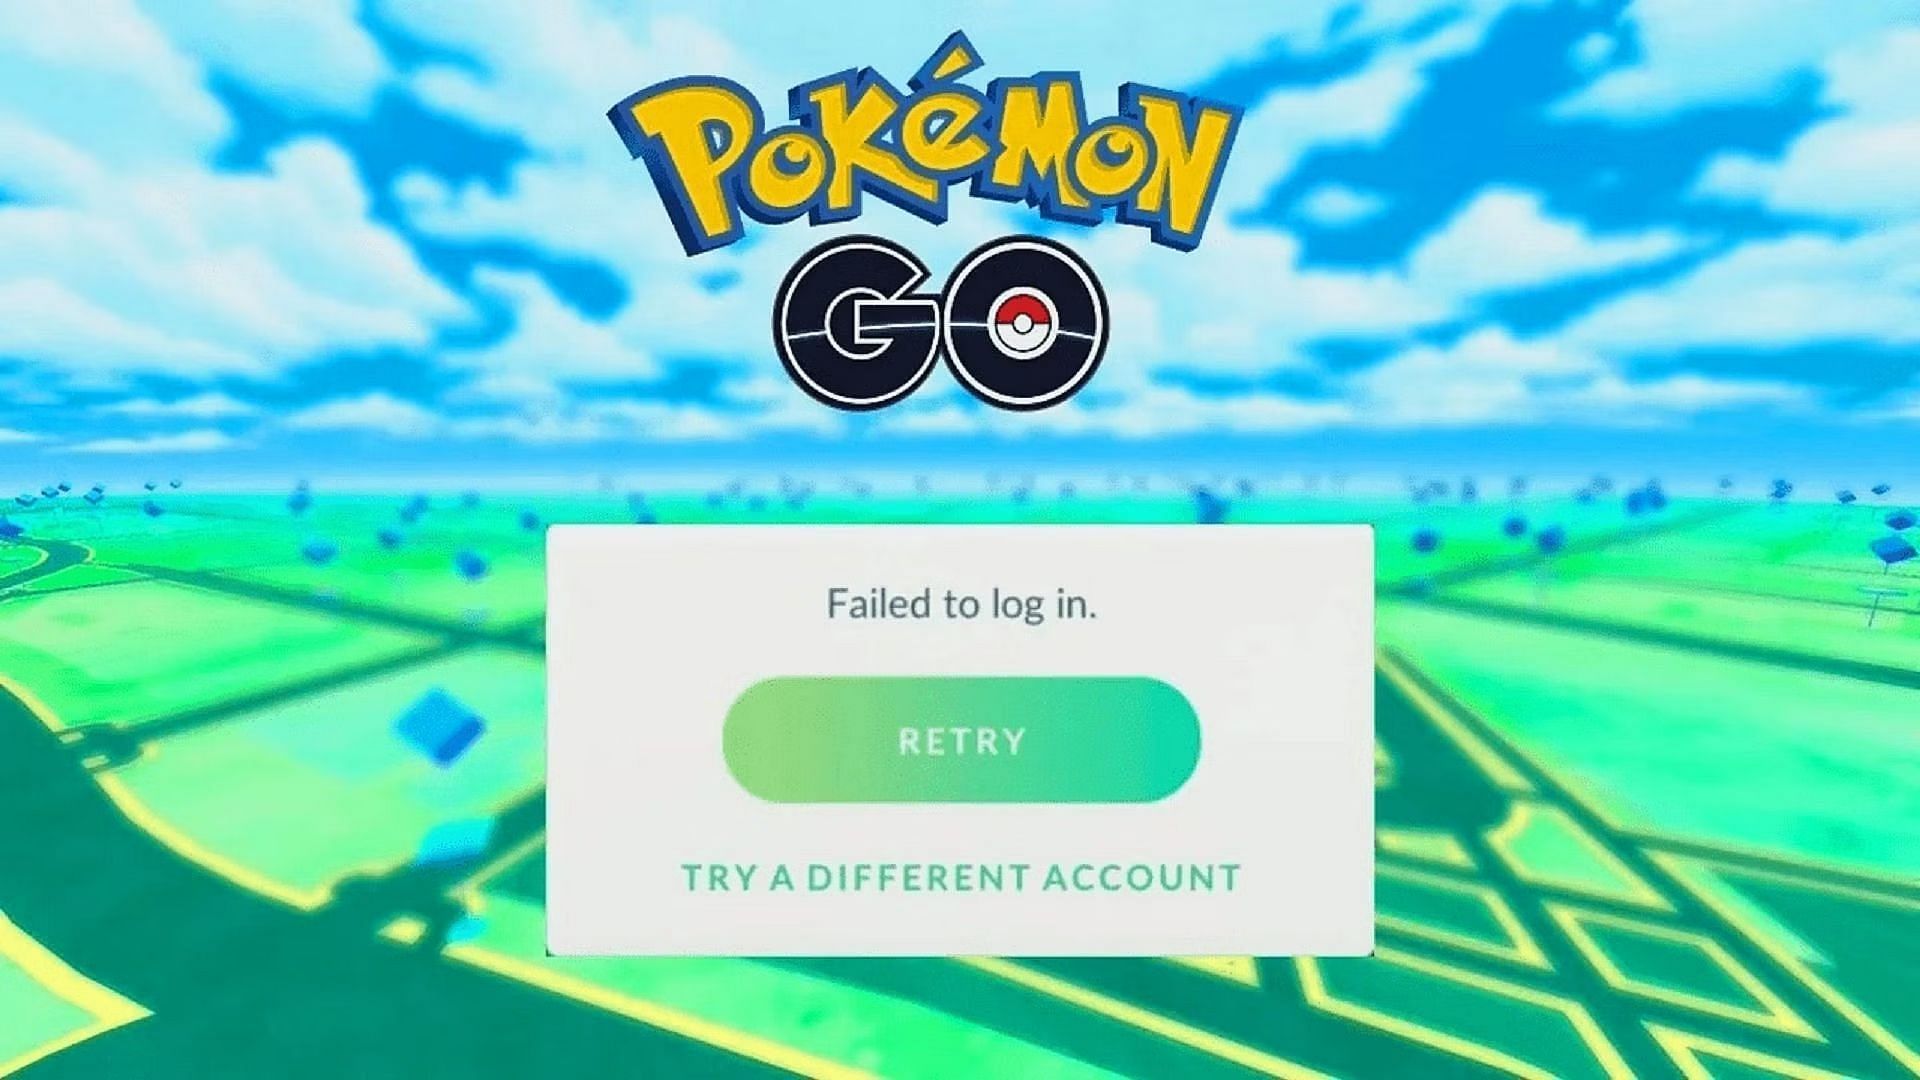 How to Fix 'Unable to Authenticate' Error on Pokemon Go?